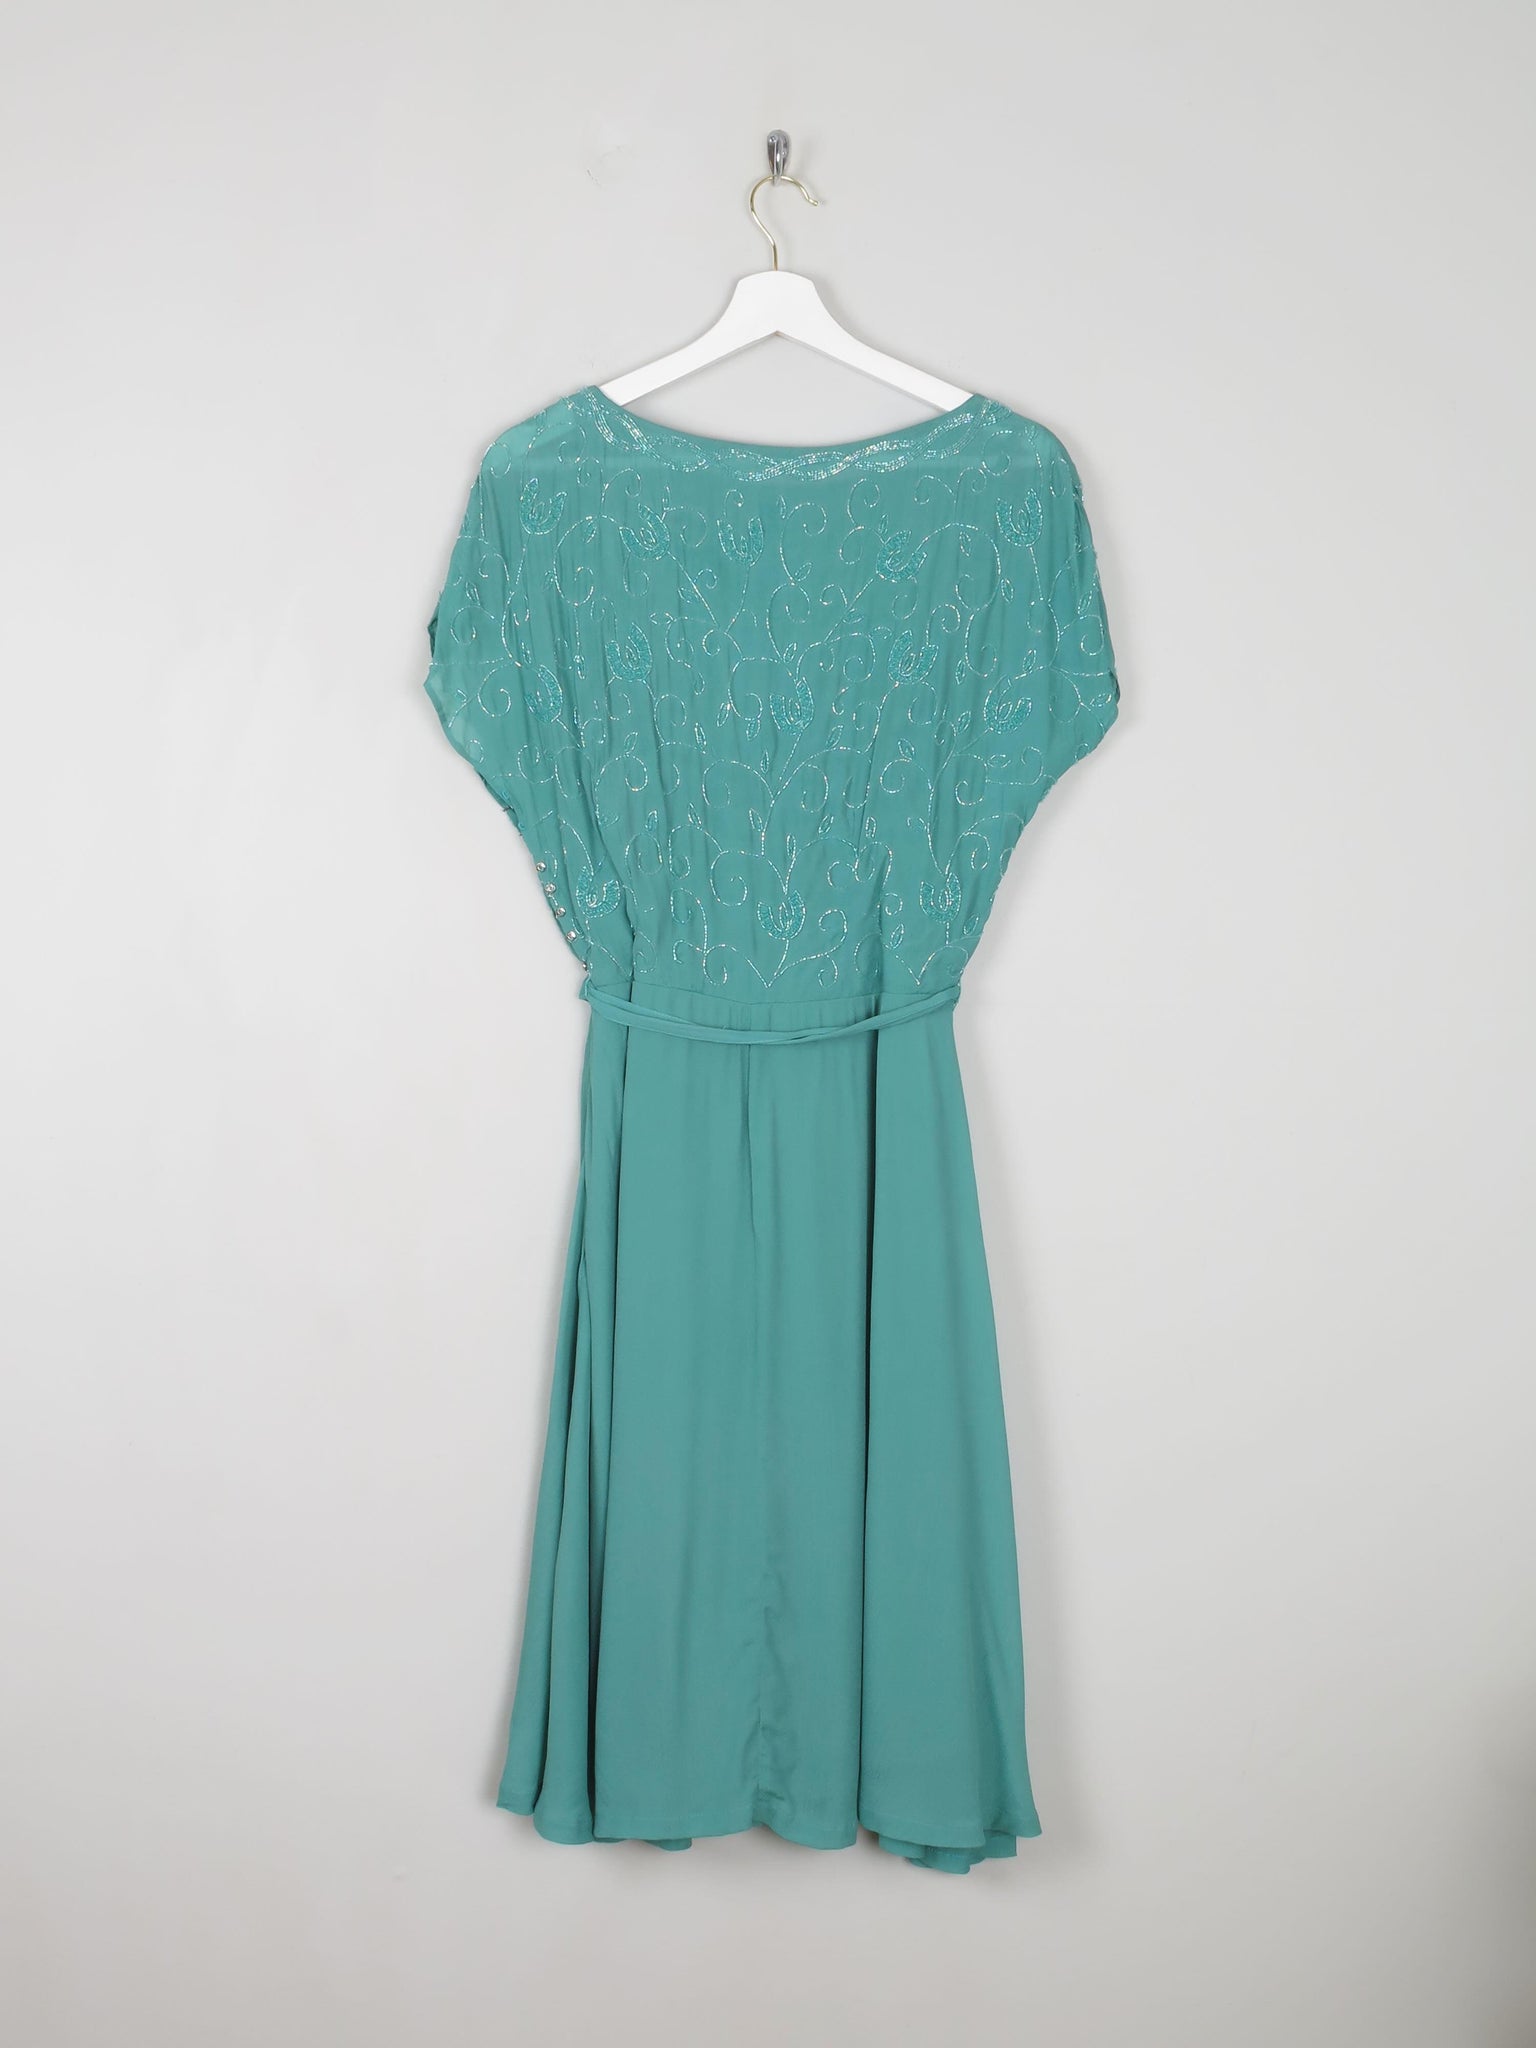 Aqua Beaded 1950s Style Beaded Dress 10 - The Harlequin